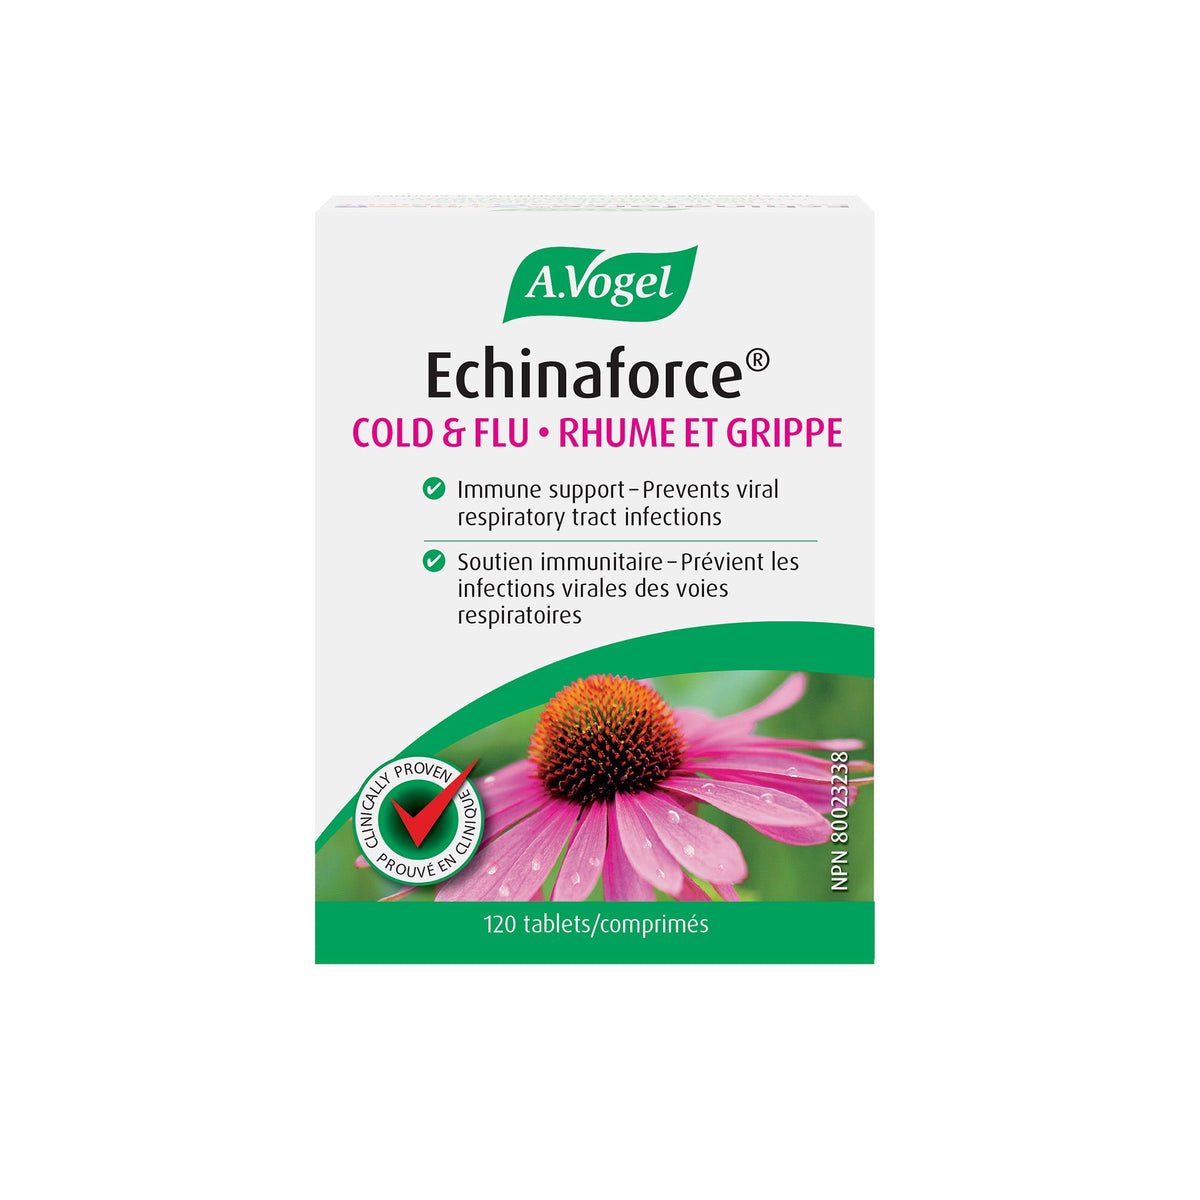 A.Vogel Echinaforce Tablets - Immune System Support 120 Tabs - A.Vogel Canada